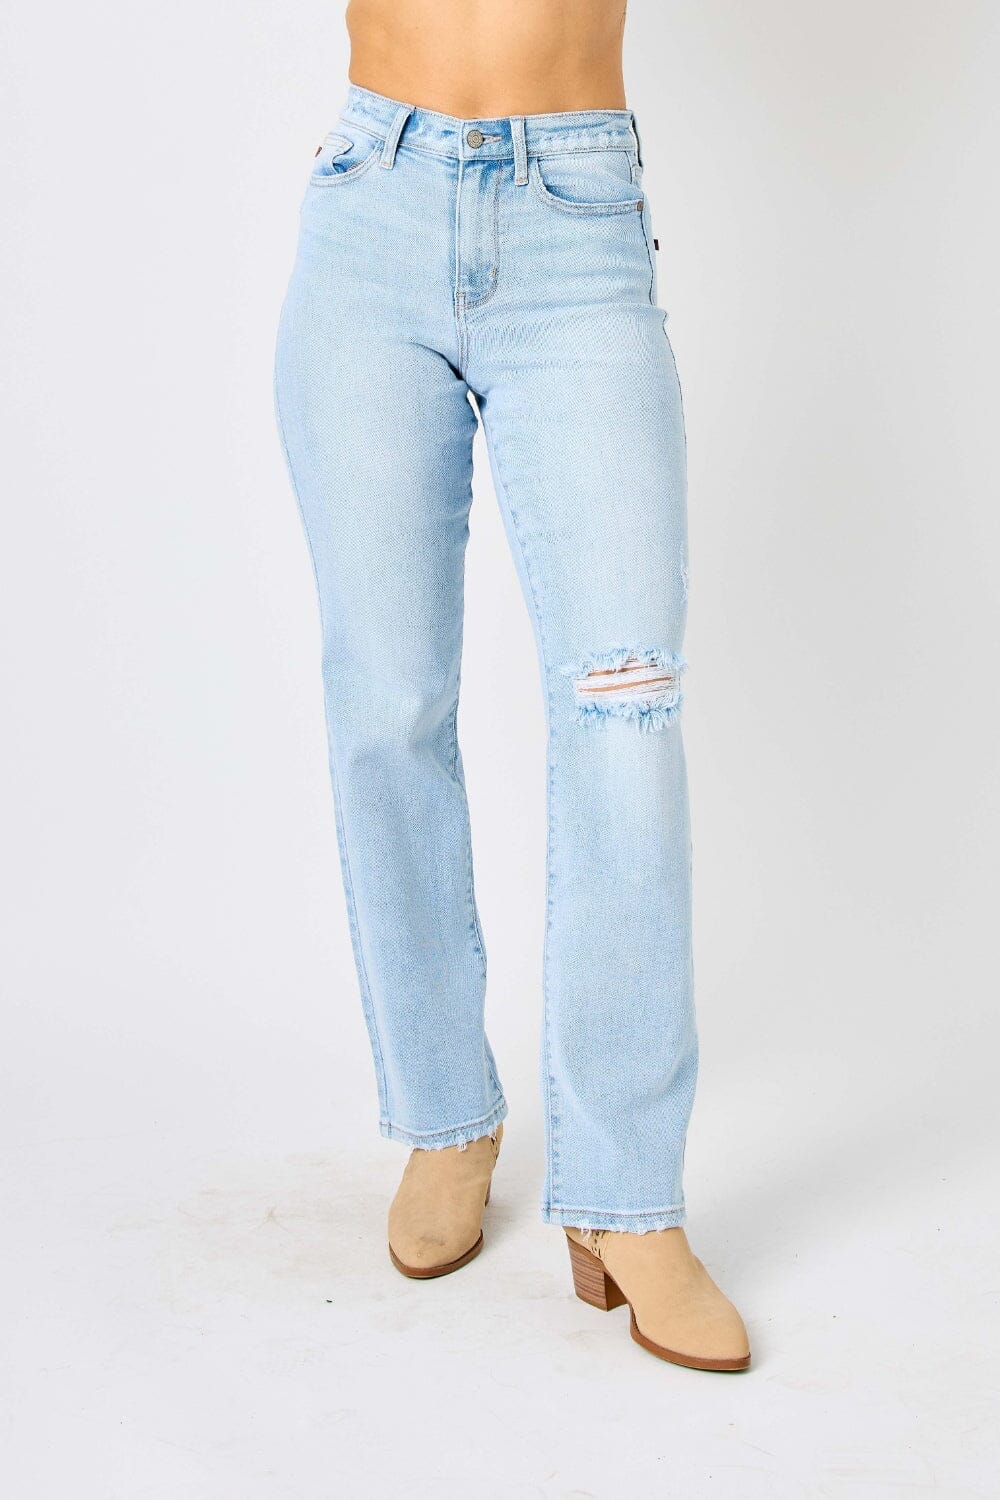 Judy Blue Light Blue High Waist Distressed Straight Jeans jeans jehouze Light 0(24) 